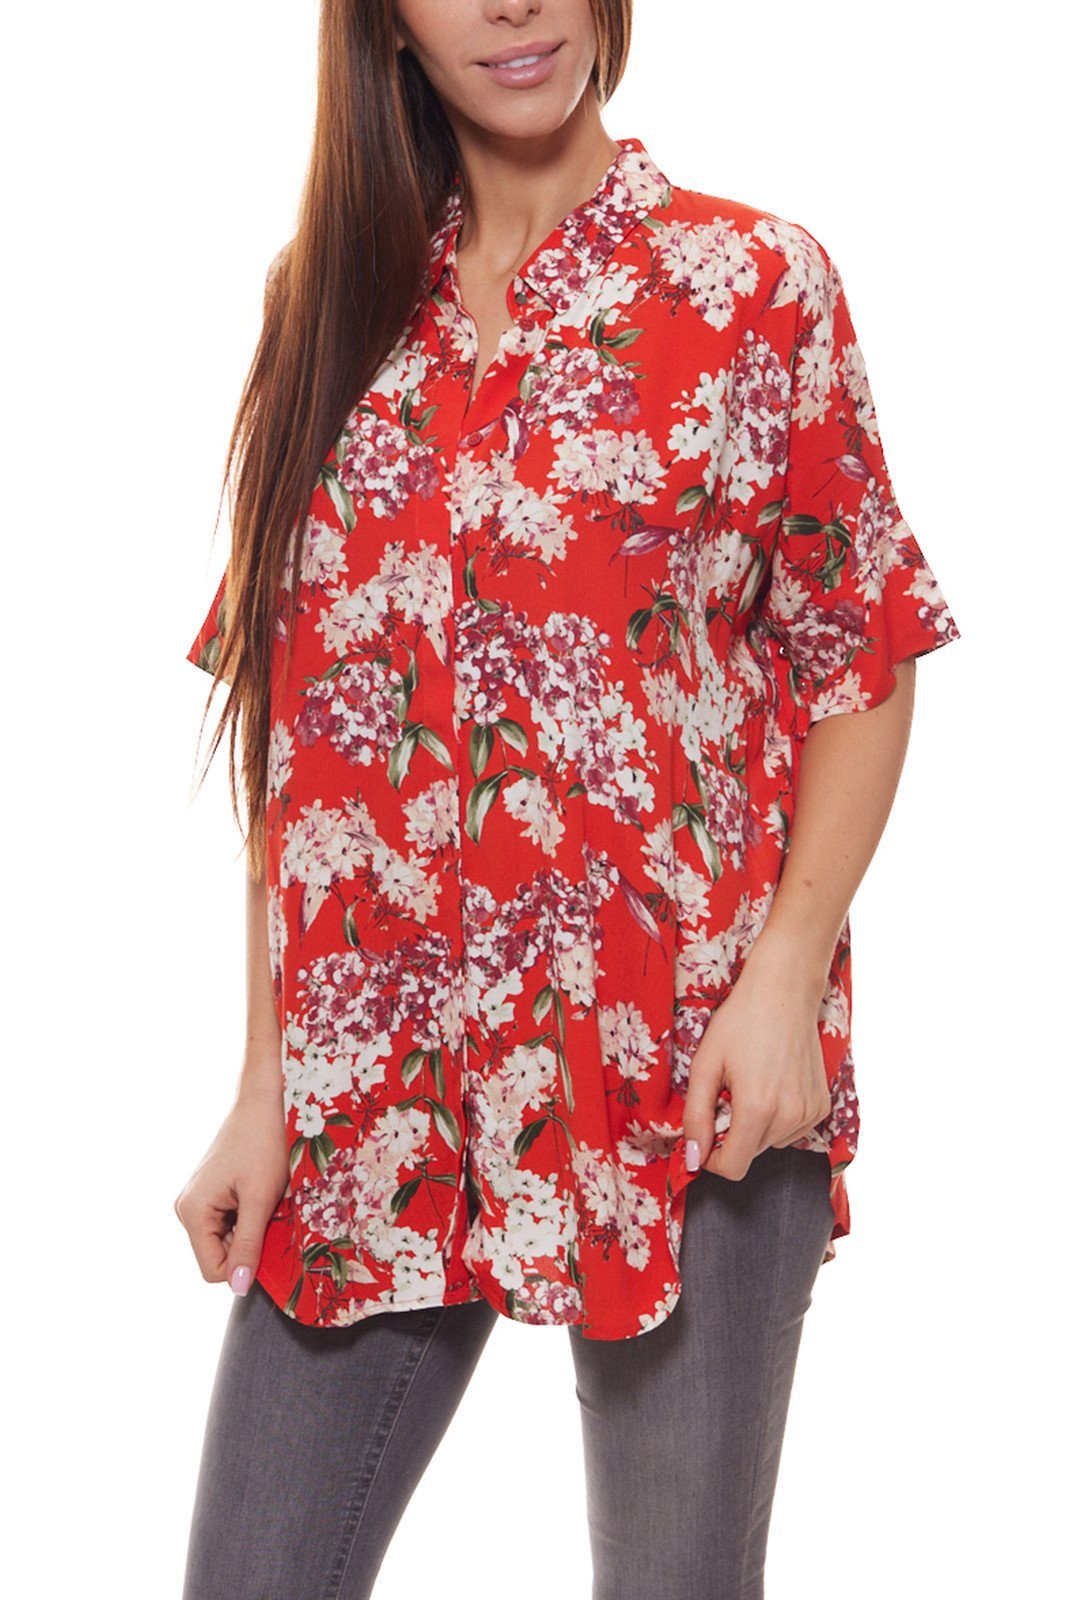 Oui Kurzarmbluse OUI Kurzarm-Bluse schicke Damen Oversized-Bluse mit Blumen-Print  Sommer-Bluse Rot